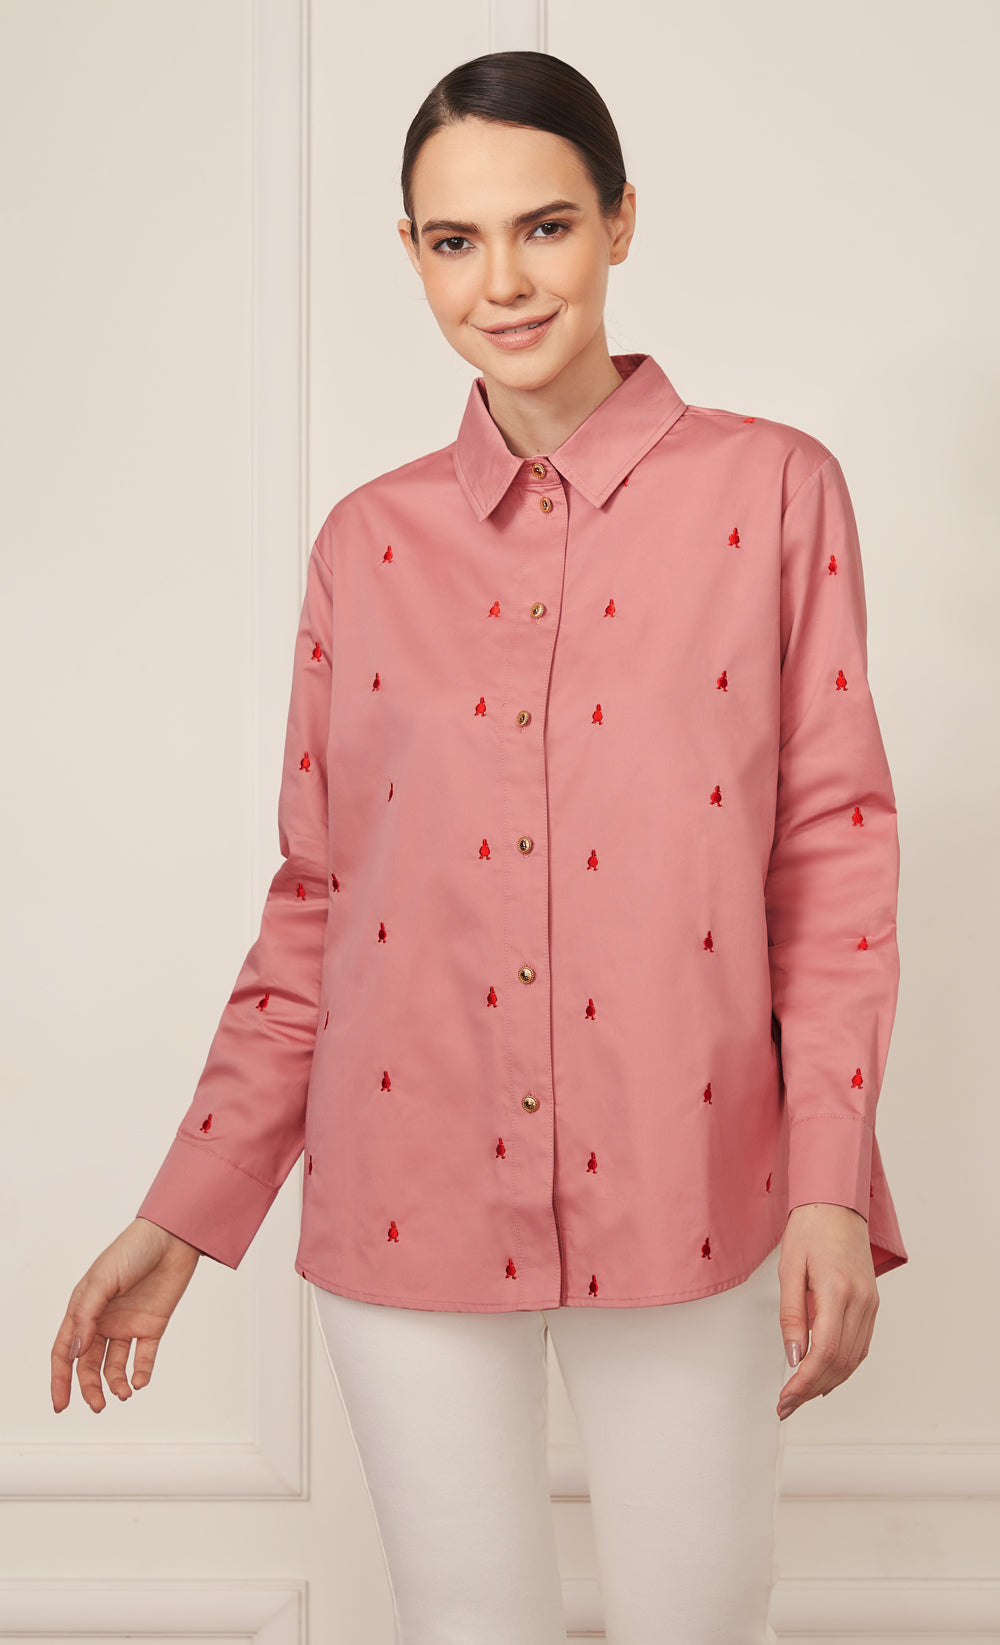 dUCk Polka Shirt in Pink